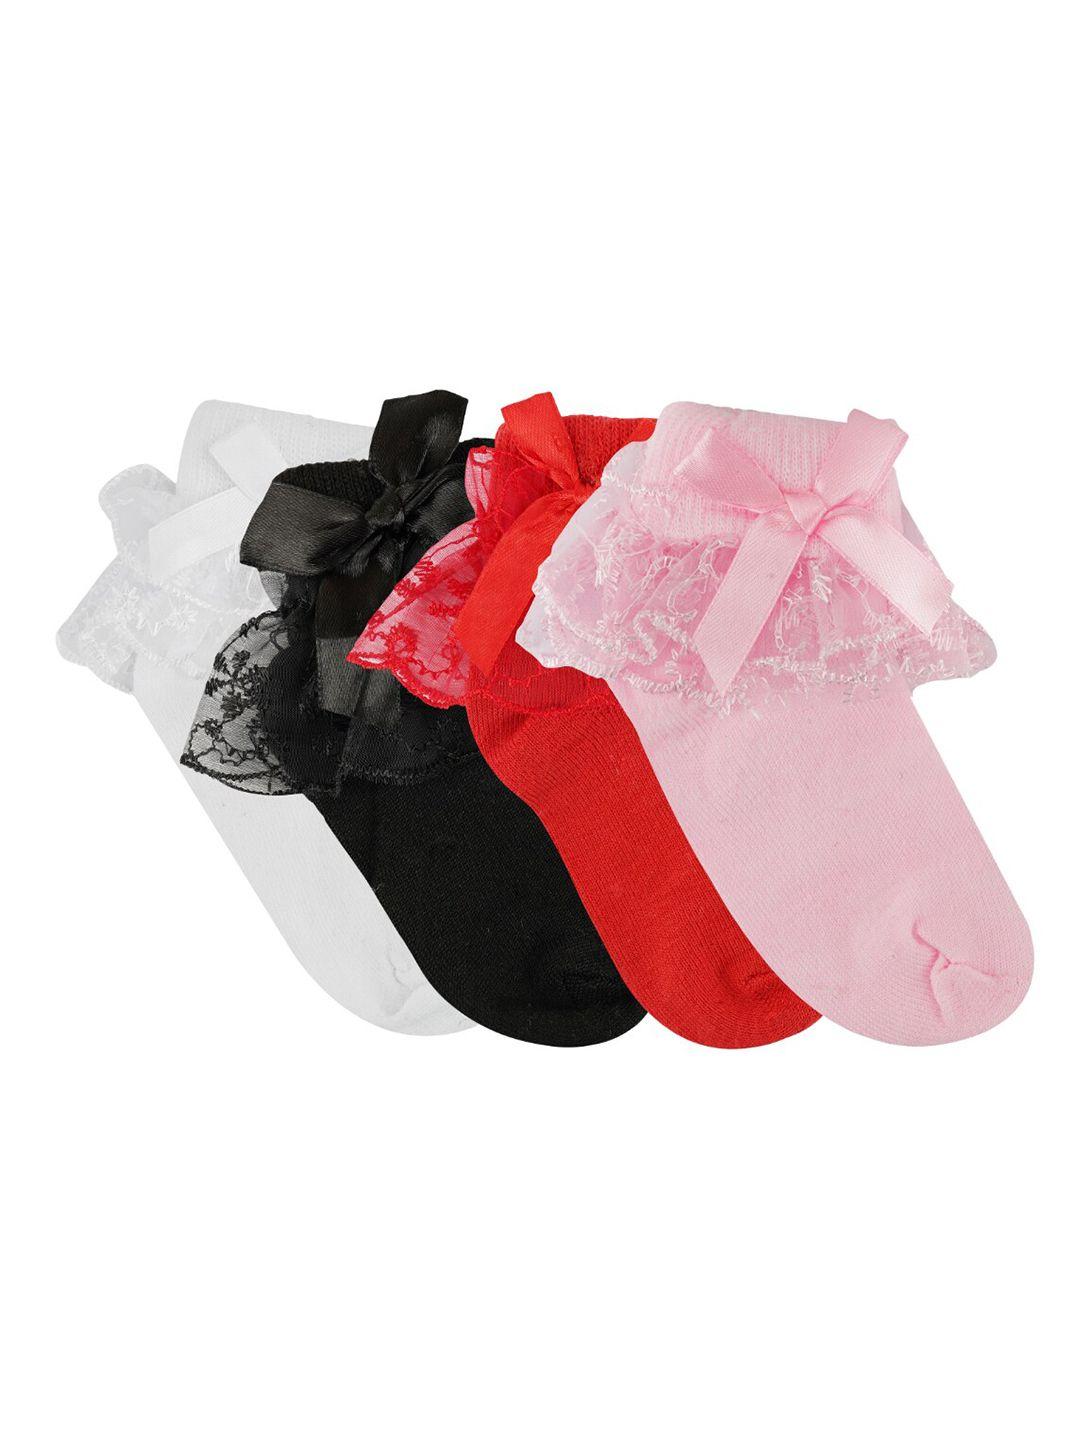 n2s next2skin infant girls pack of 4 assorted cotton calf-length socks